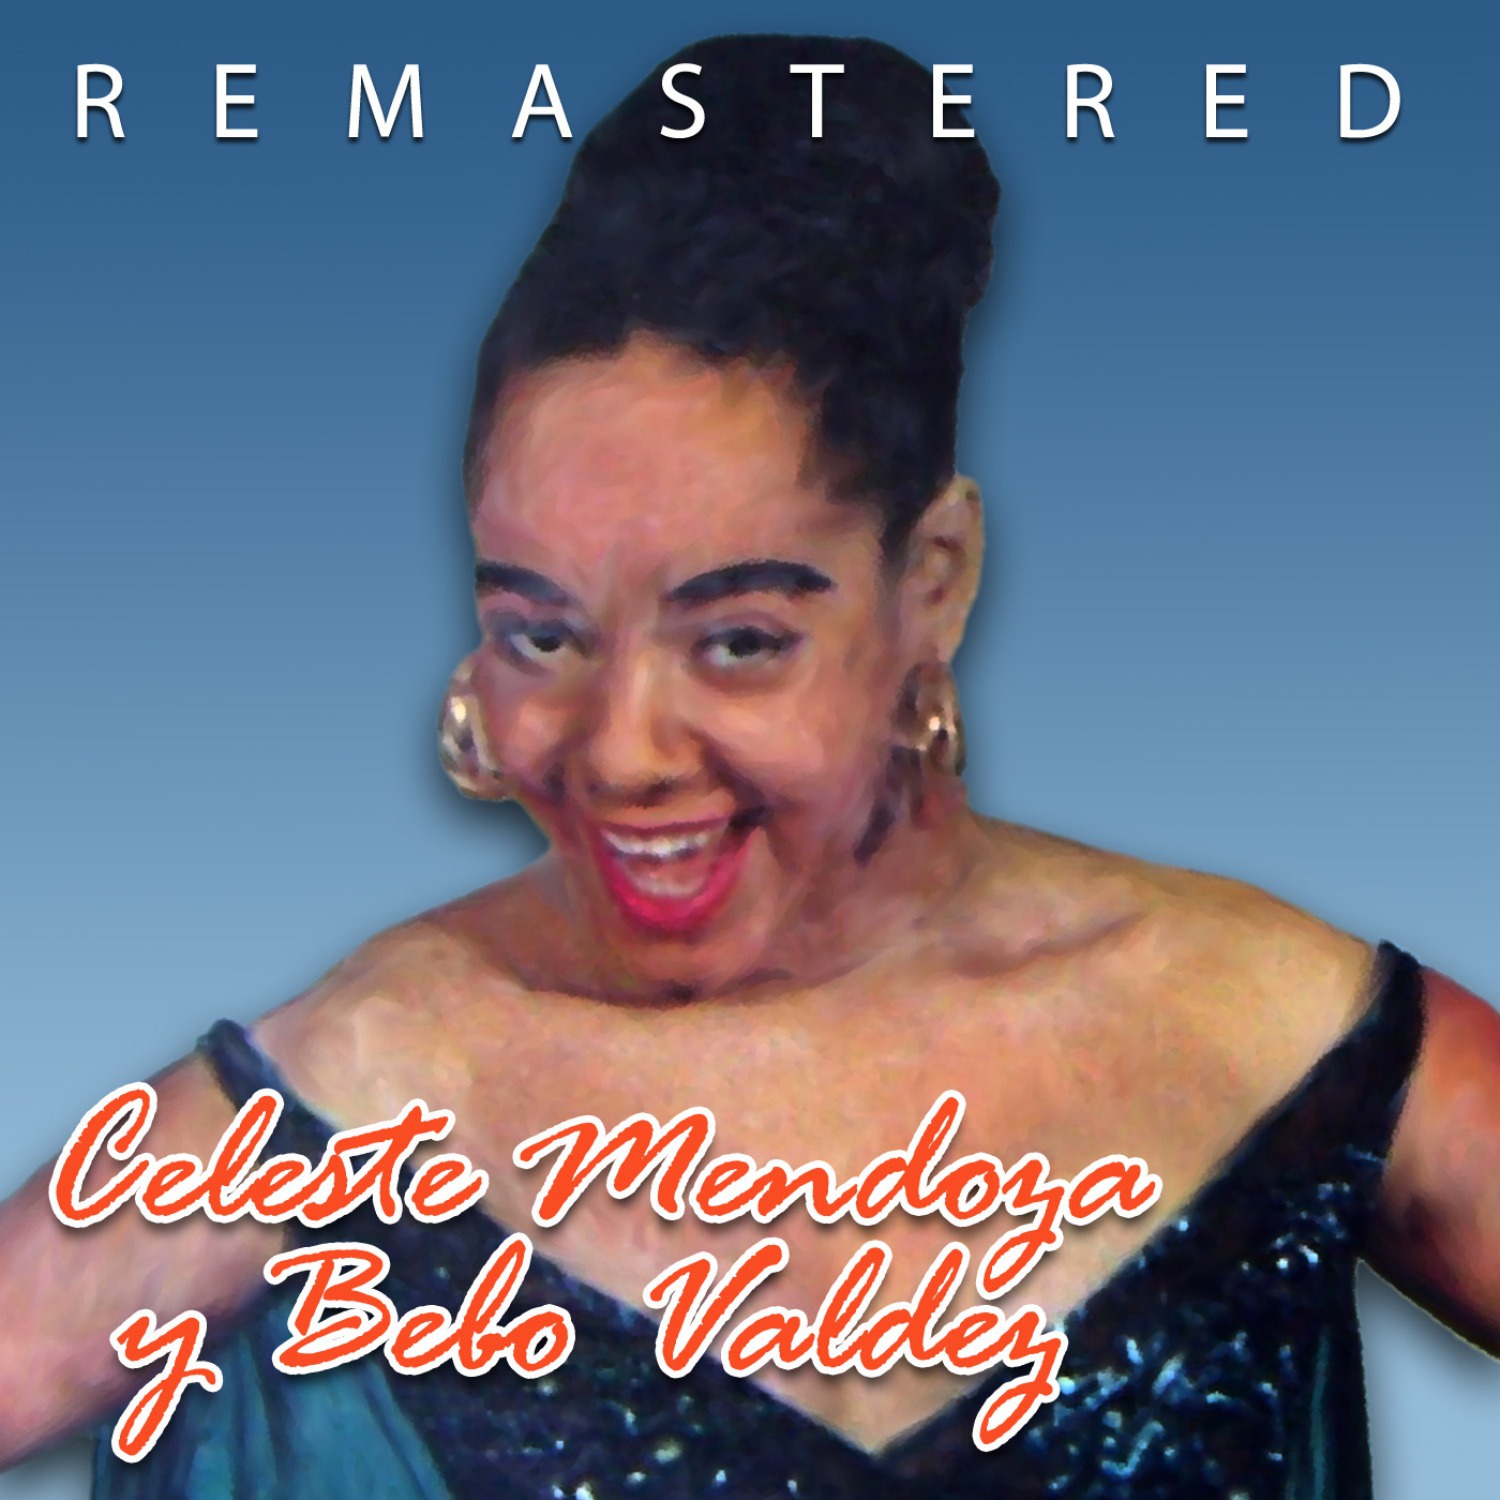 Celeste Mendoza y Bebo Valde s Remastered